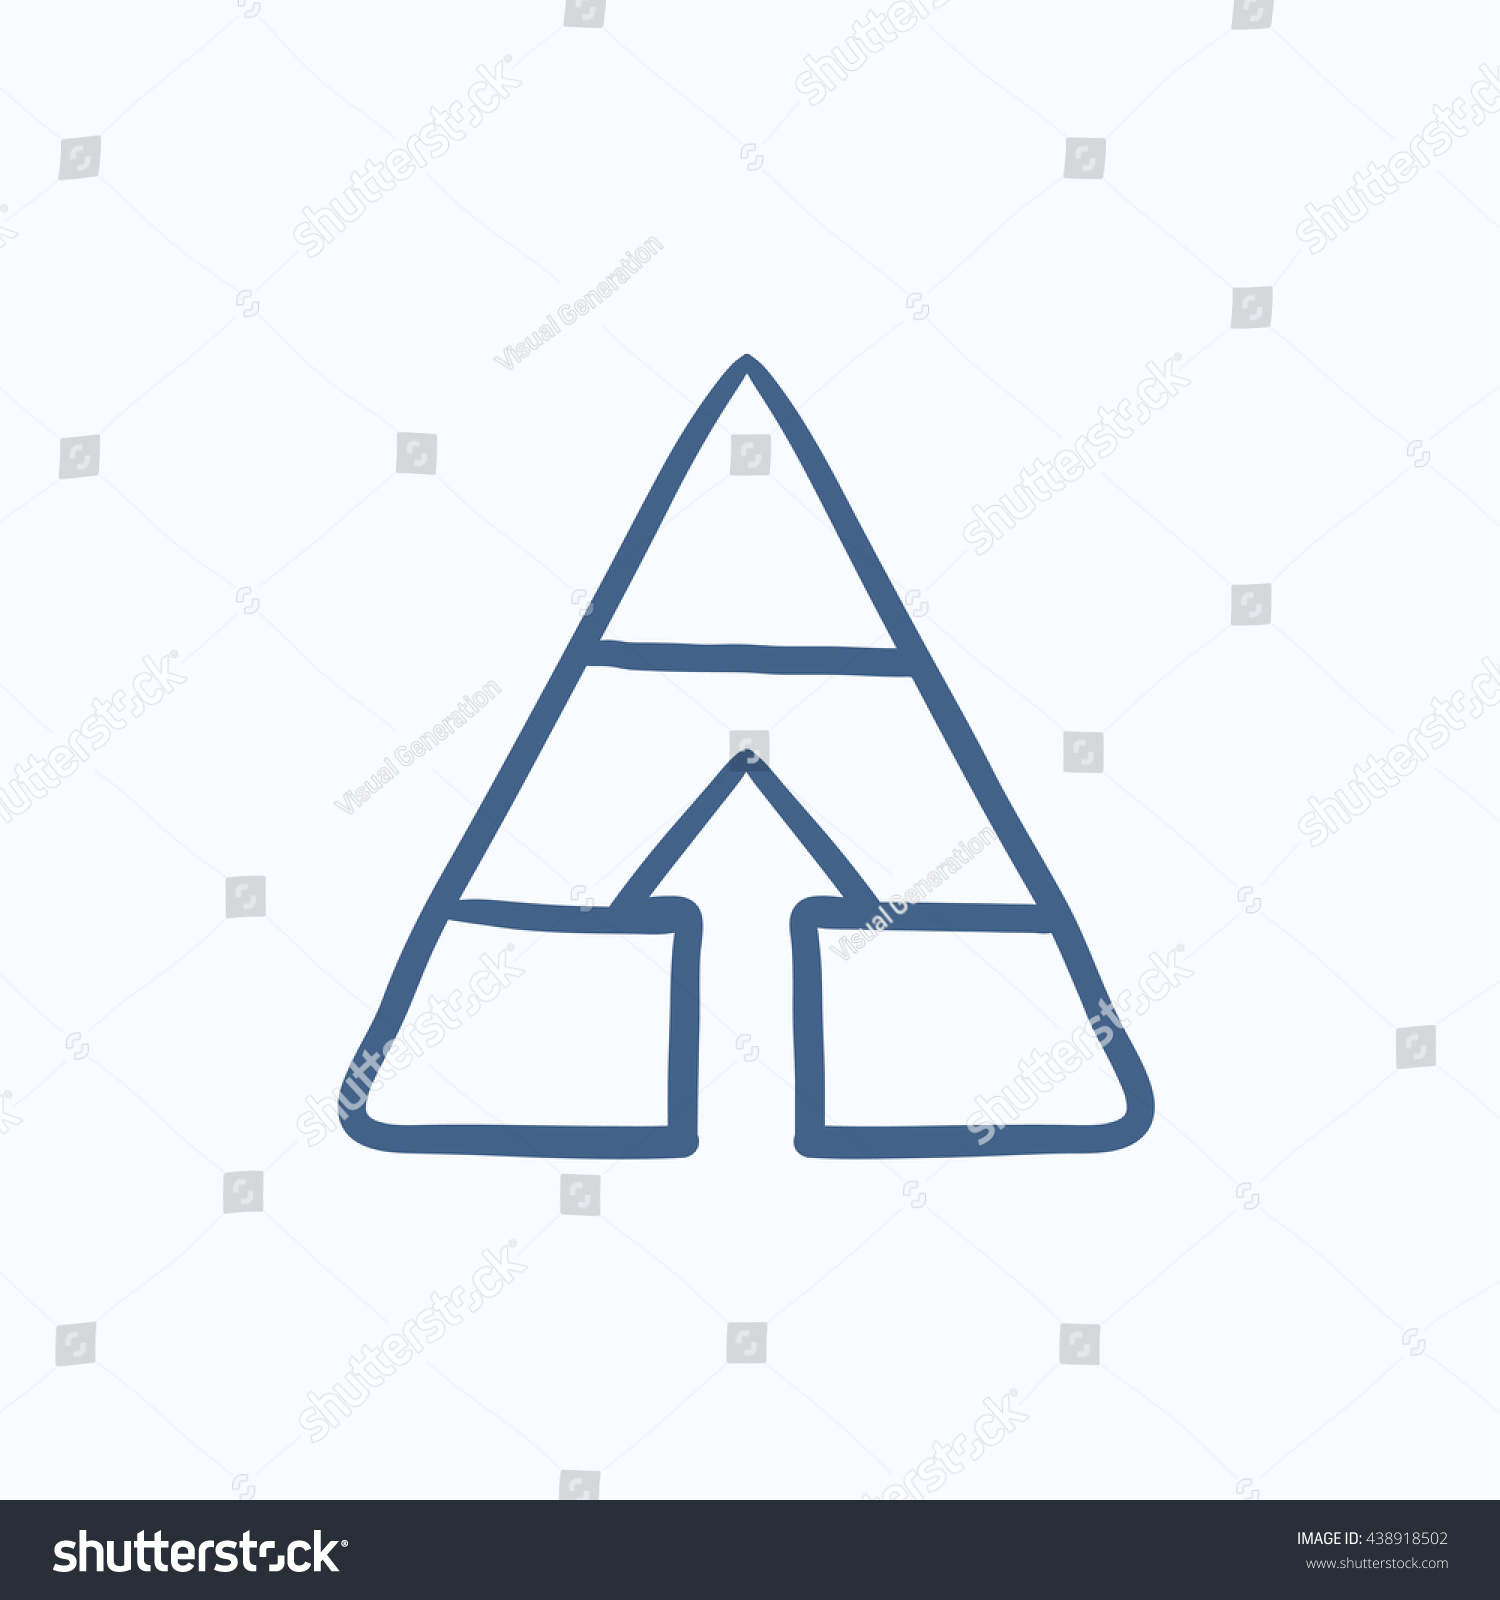 Pyramid Arrow Vector Sketch Icon Isolated Stock Vector 438918502 ...